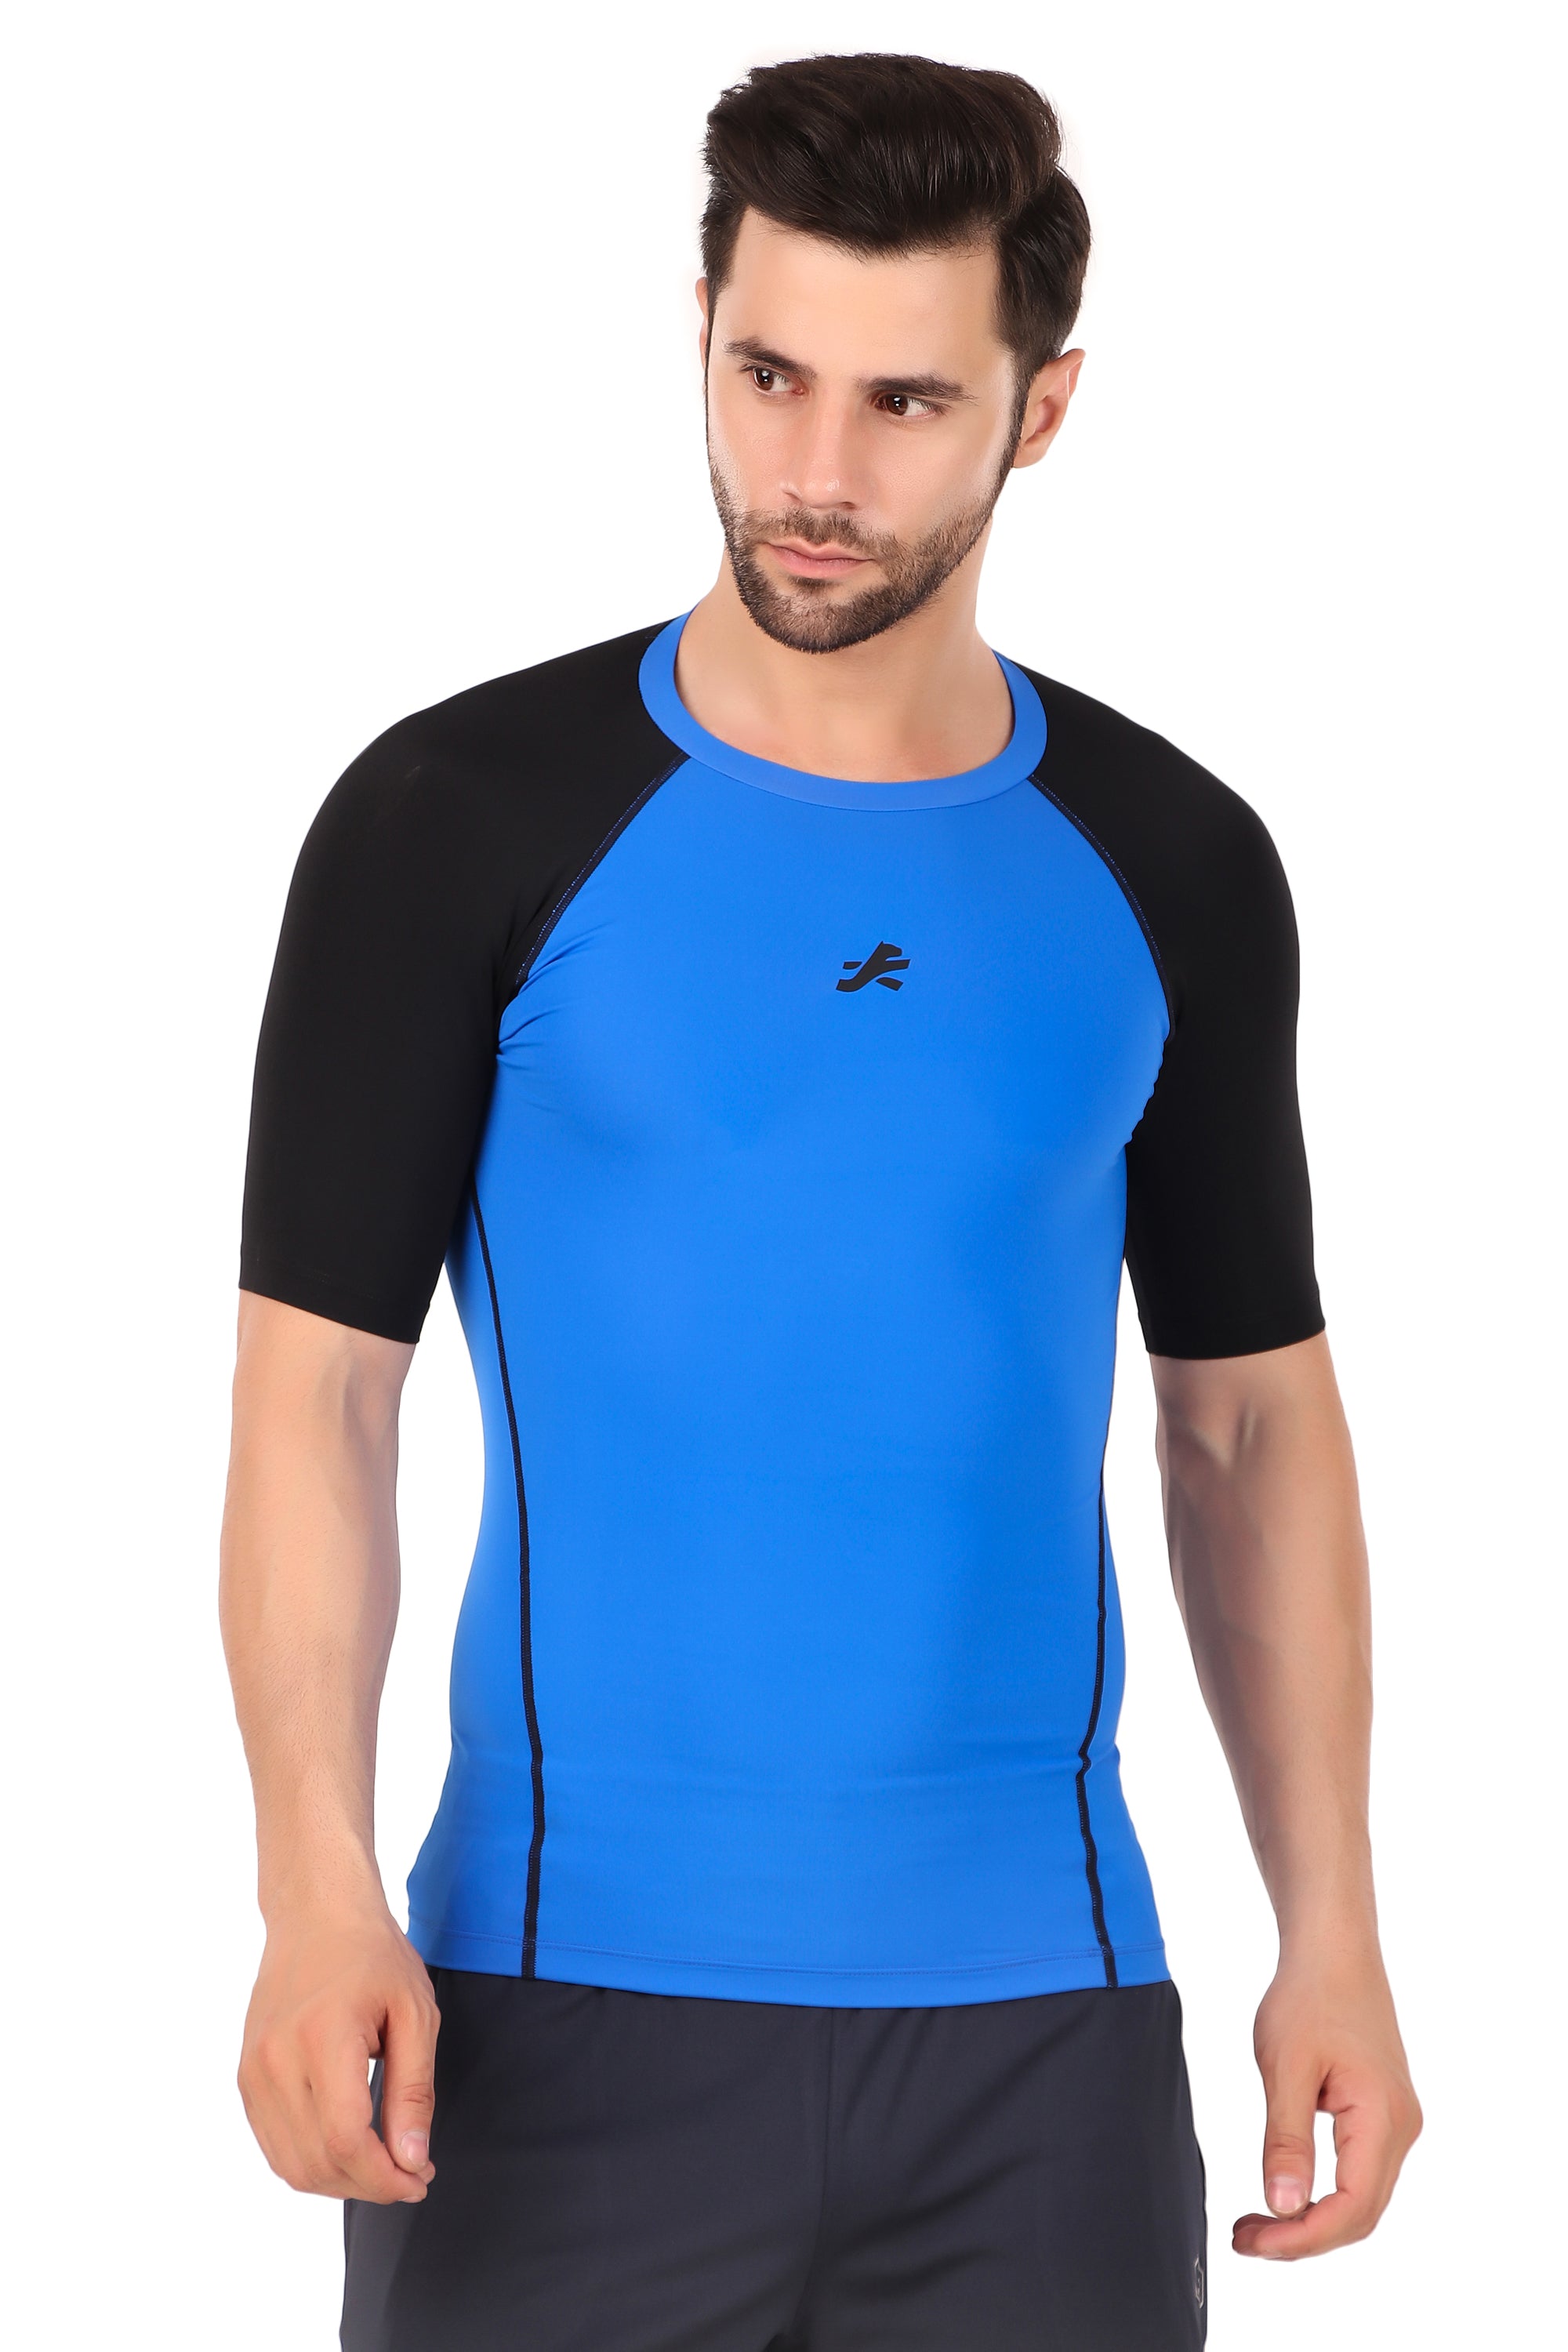 Nylon Compression Tshirt Half Sleeve Tights For Men (Royal Blue/Black)